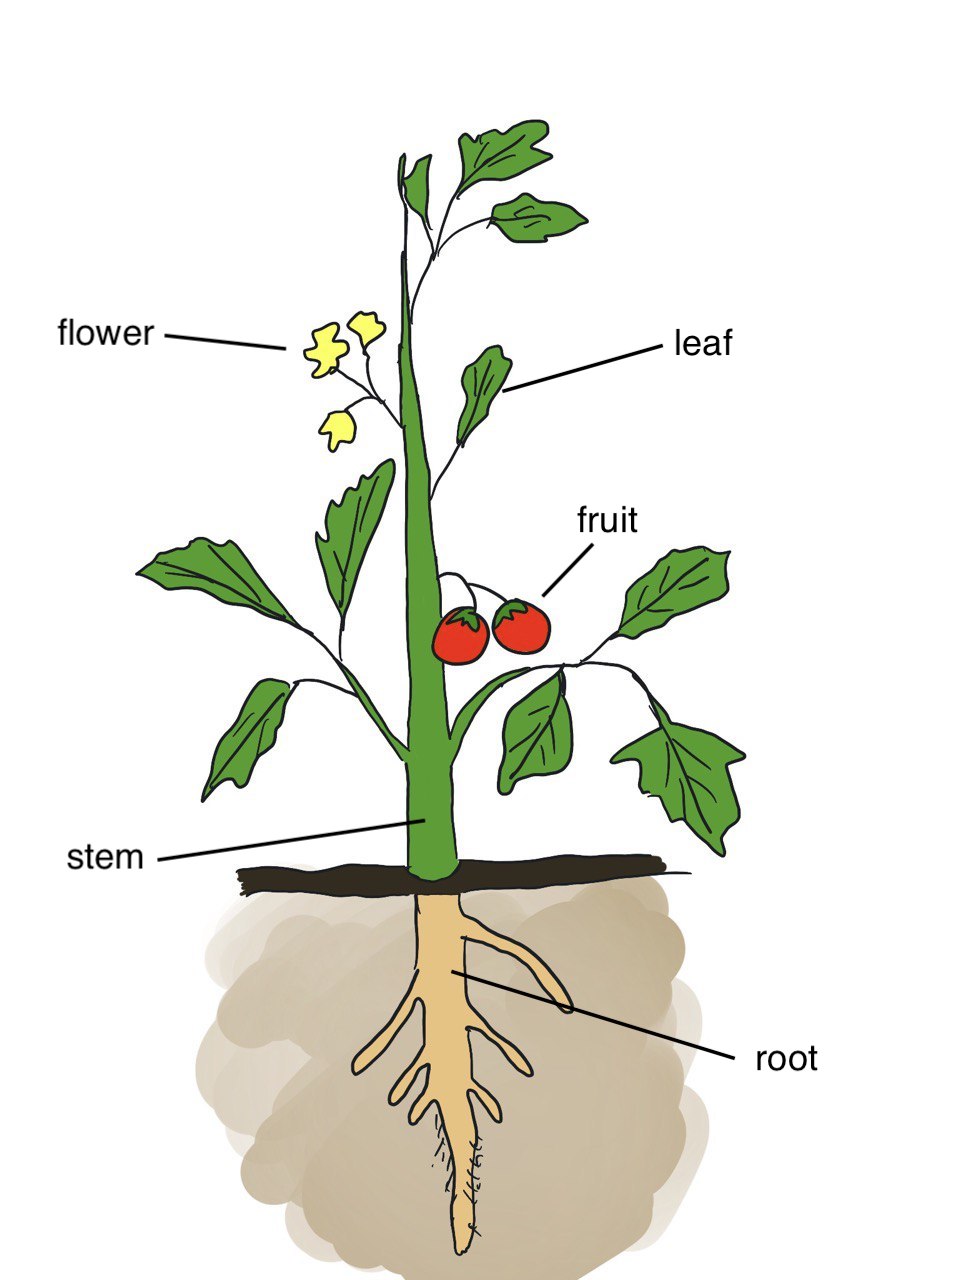 Basic plant structure